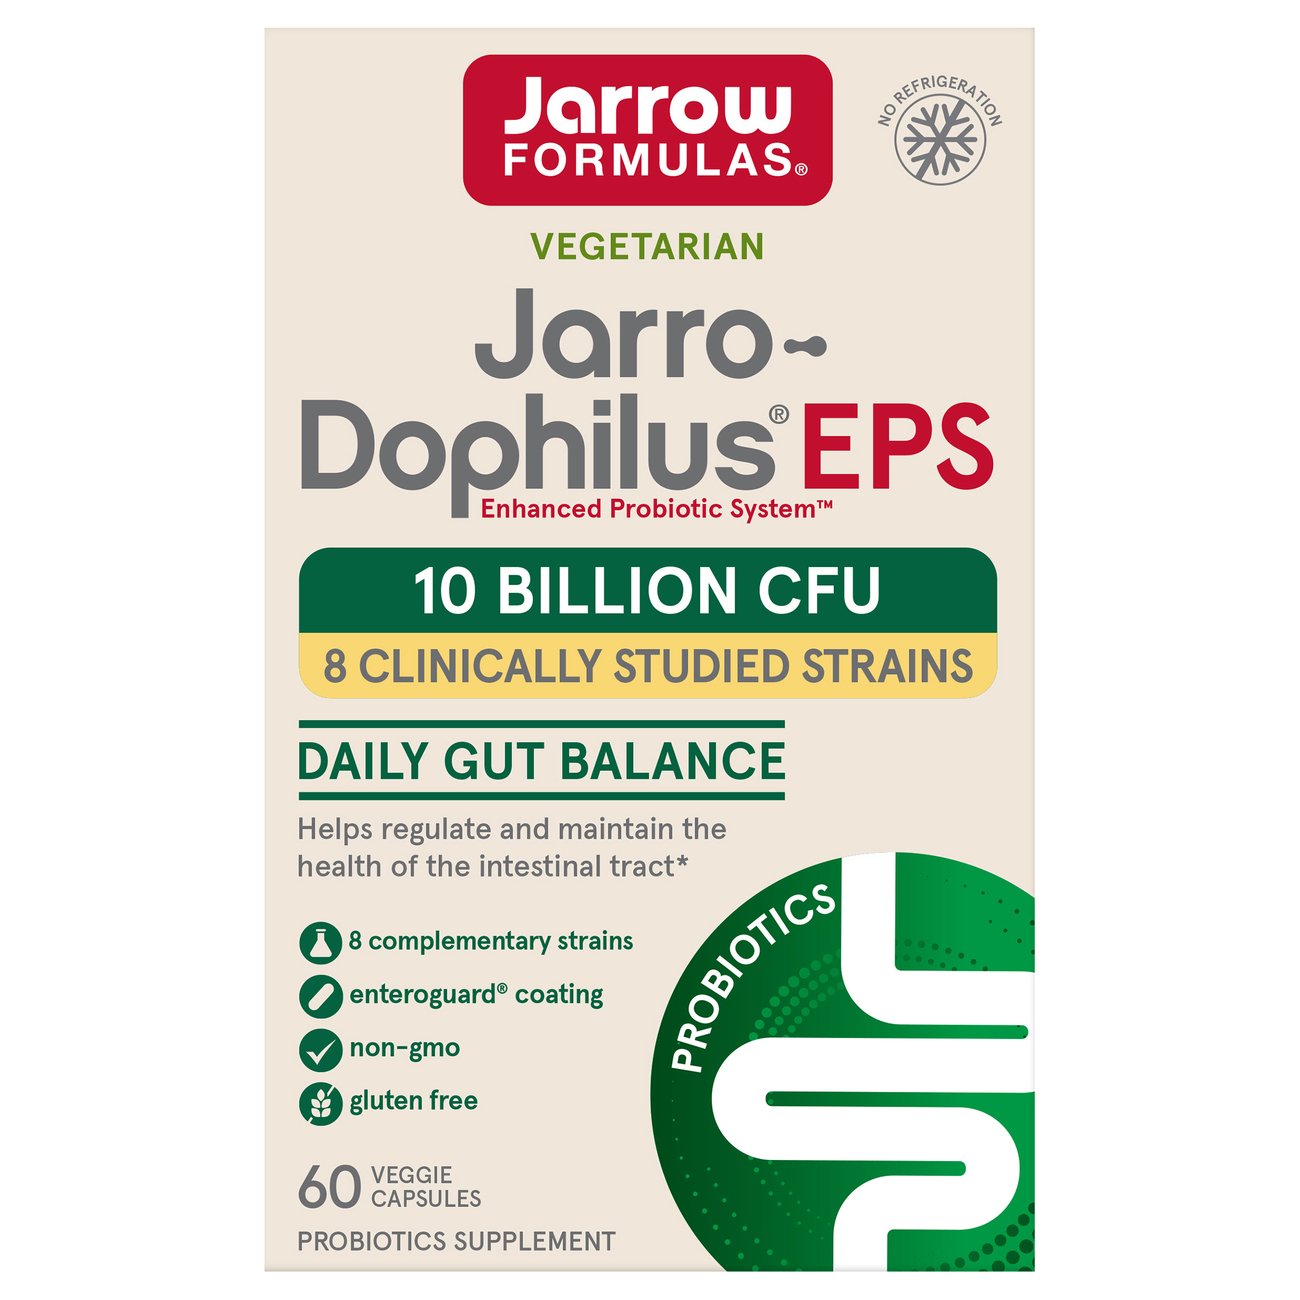 Jarrow Formulas Jarro Dophilus Enhanced Probiotic System Jarro Dophilus Eps Vegetarian Capsules Shop Diet Fitness At H E B